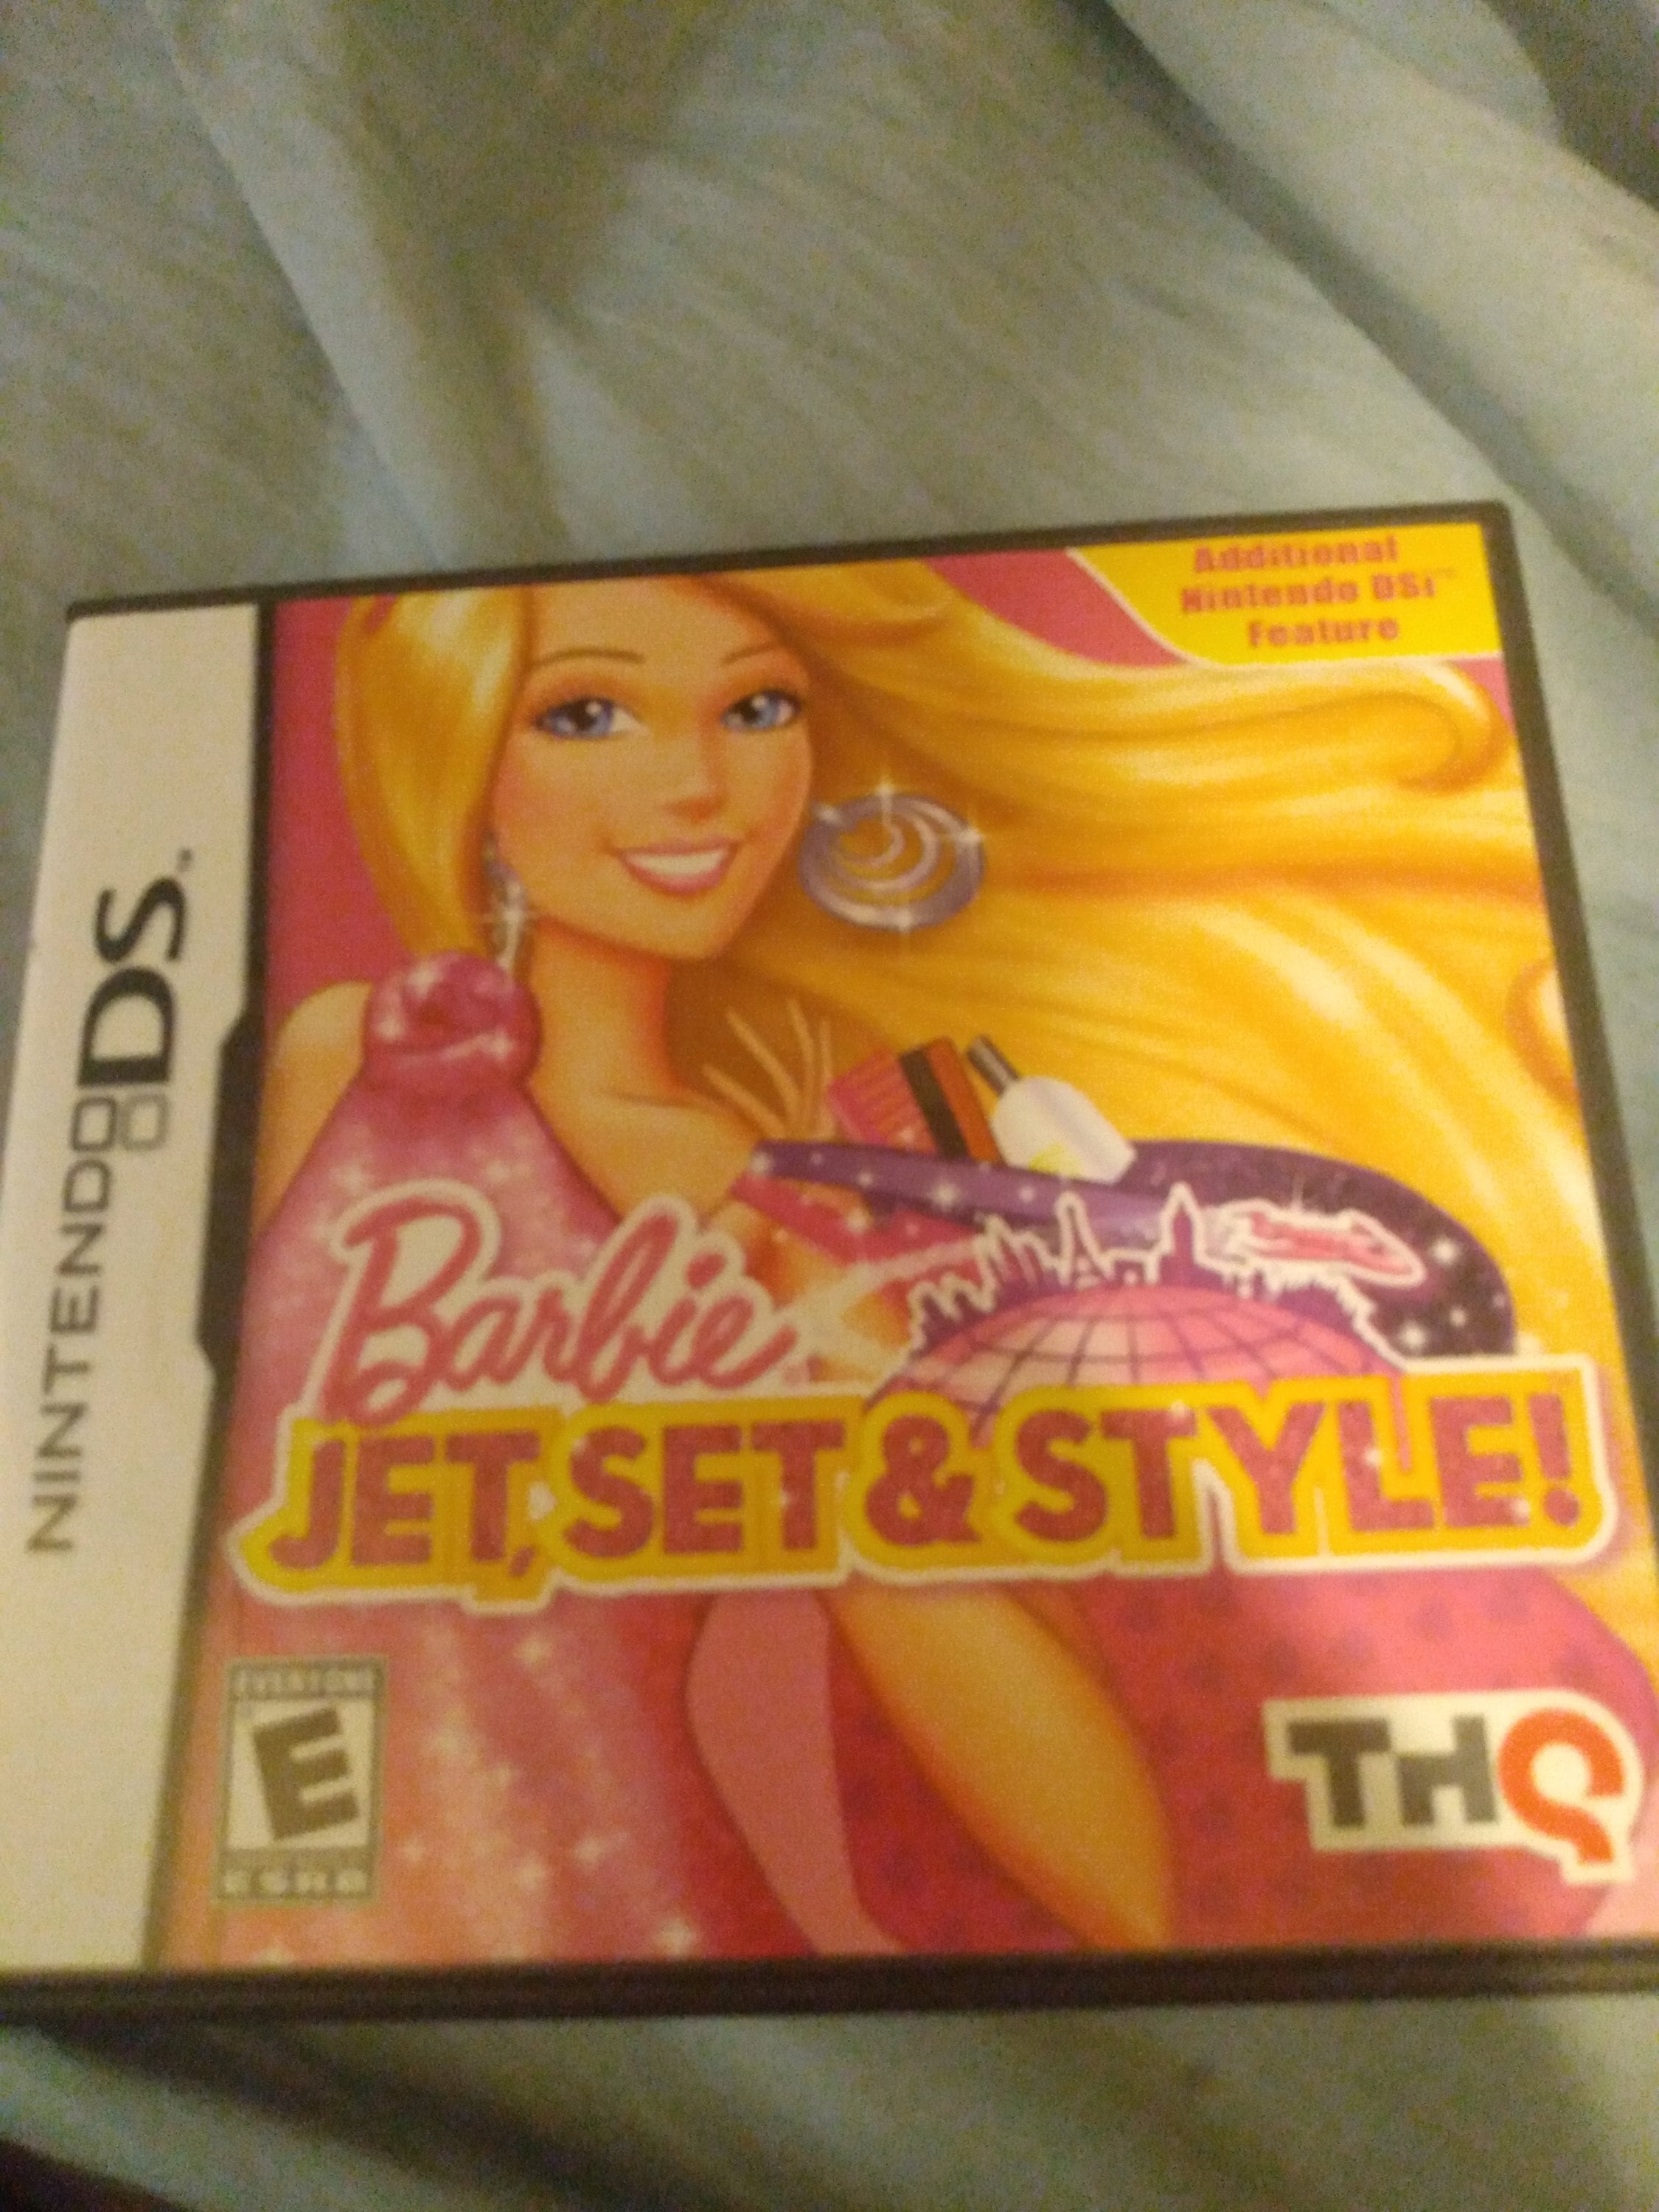 Barbie: Jet, Set & Style